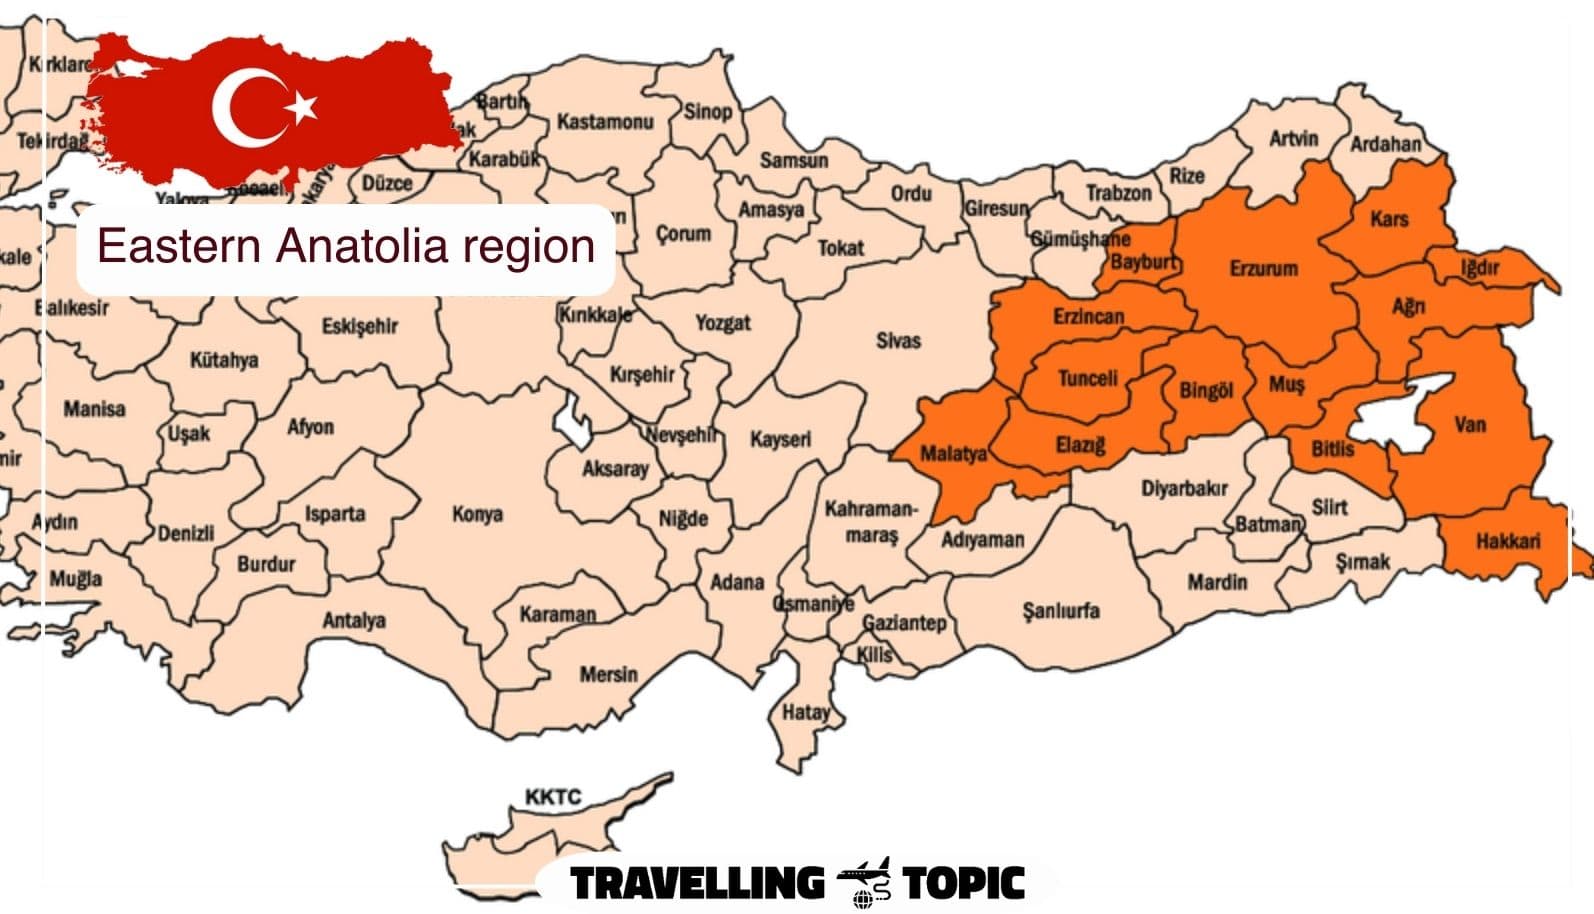 Eastern Anatolia region